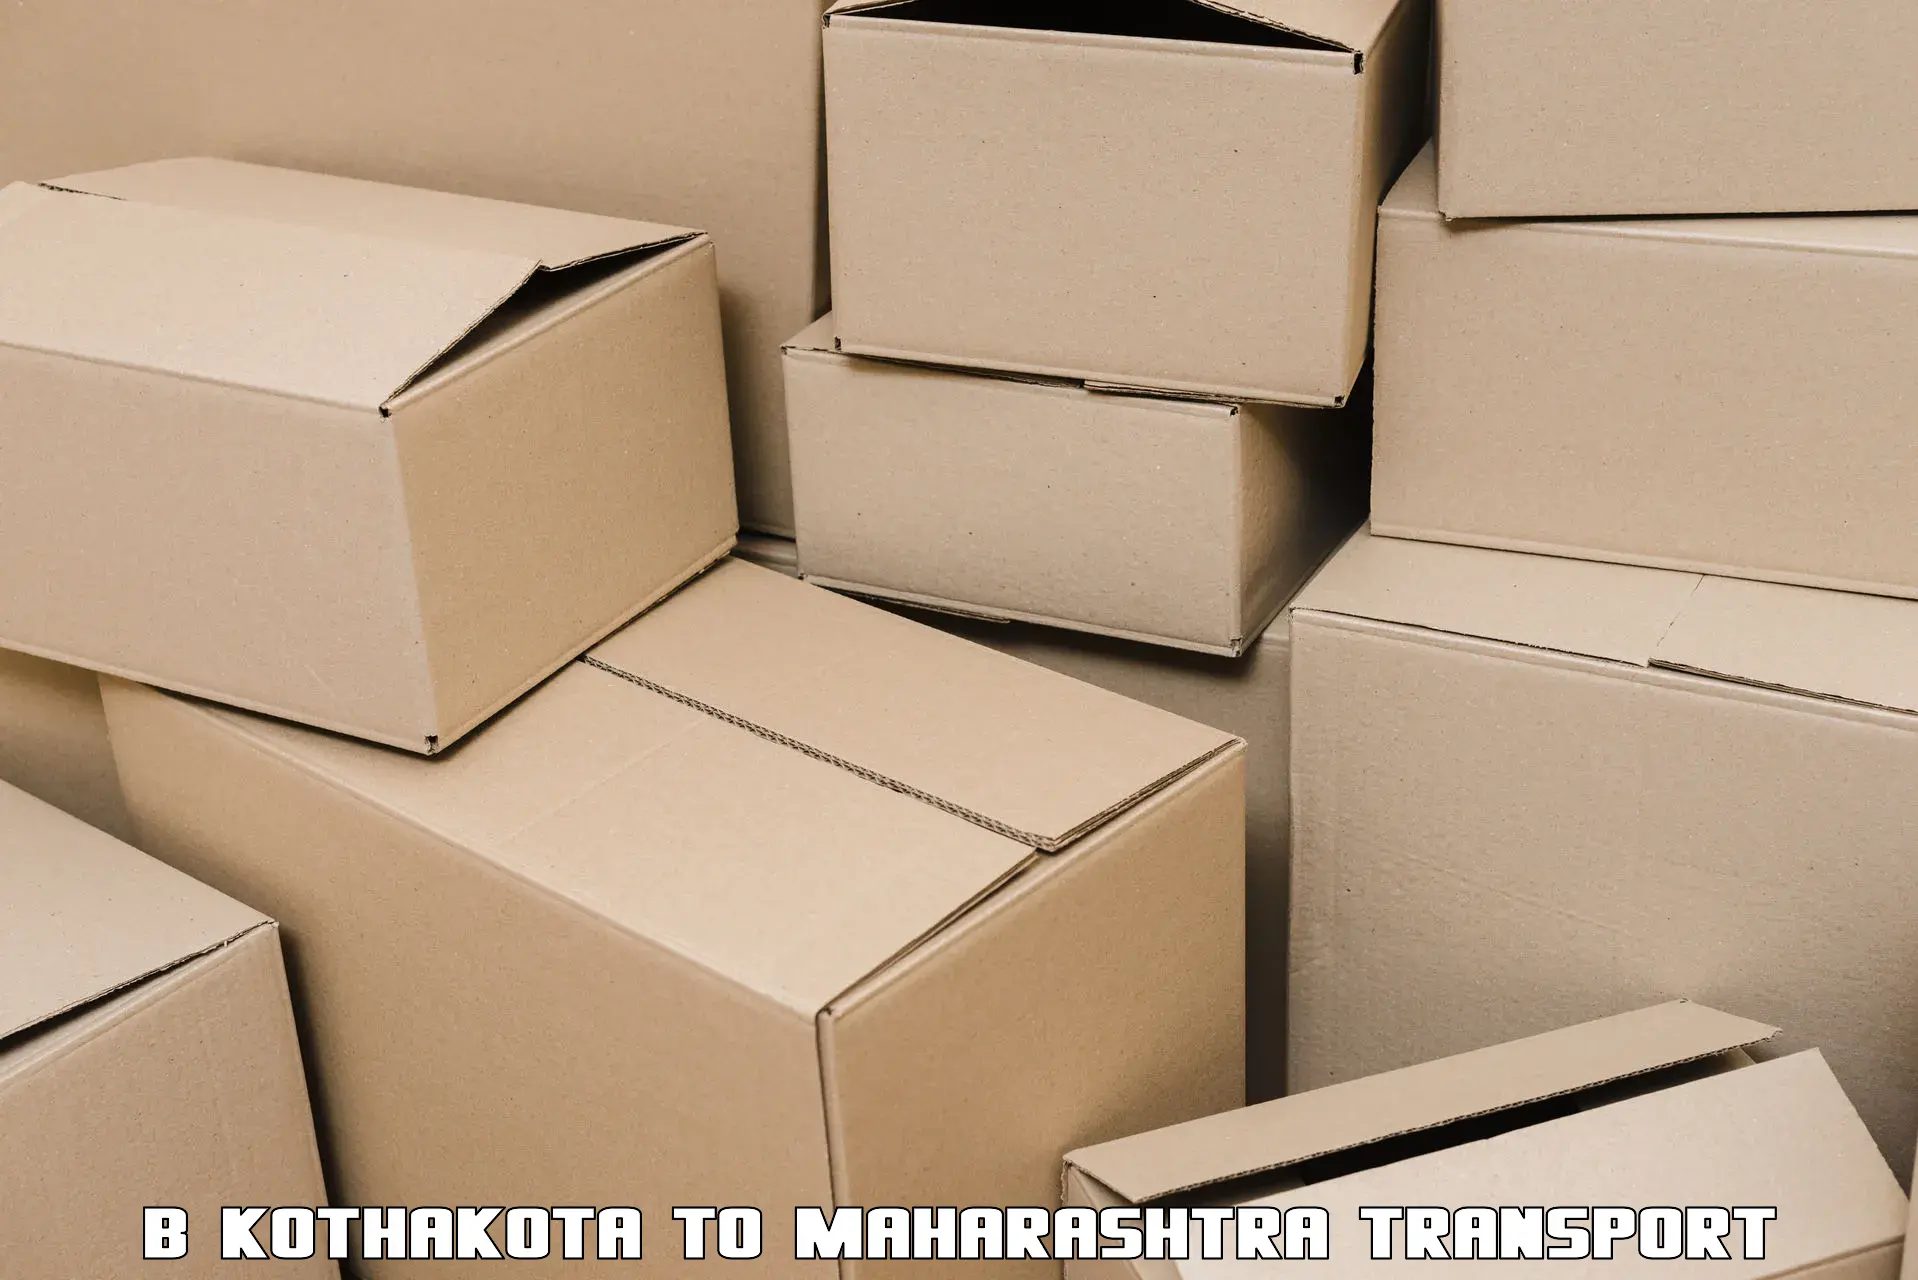 Container transportation services B Kothakota to Shindkheda